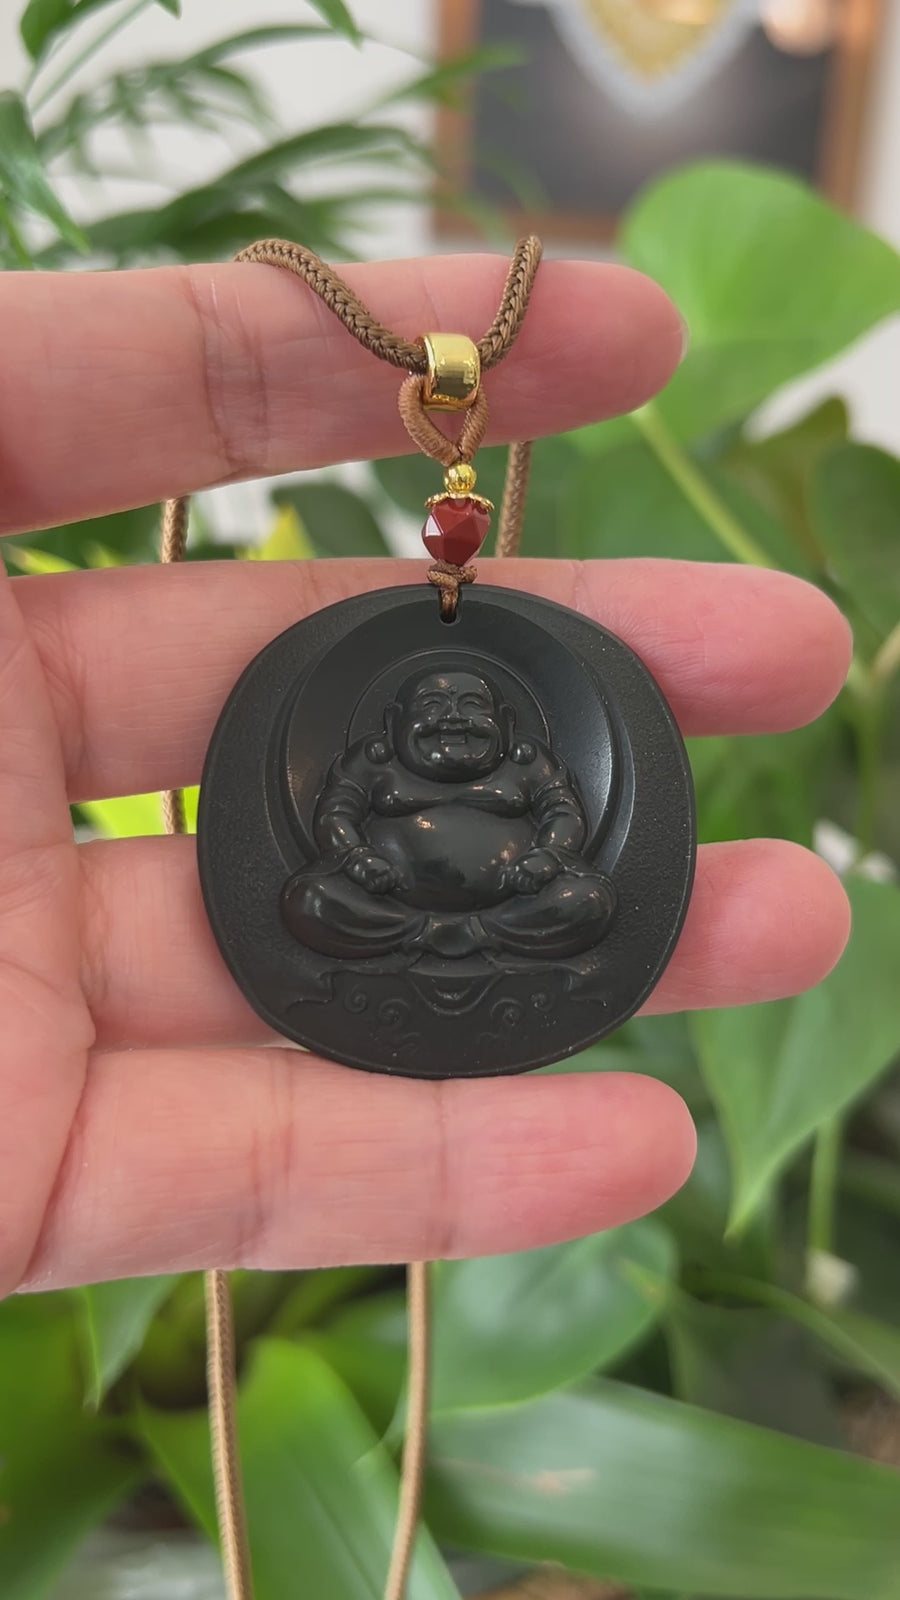 Baikalla™ "Happy Buddha" Genuine Black Jade Pendant Necklace With Adjustable String